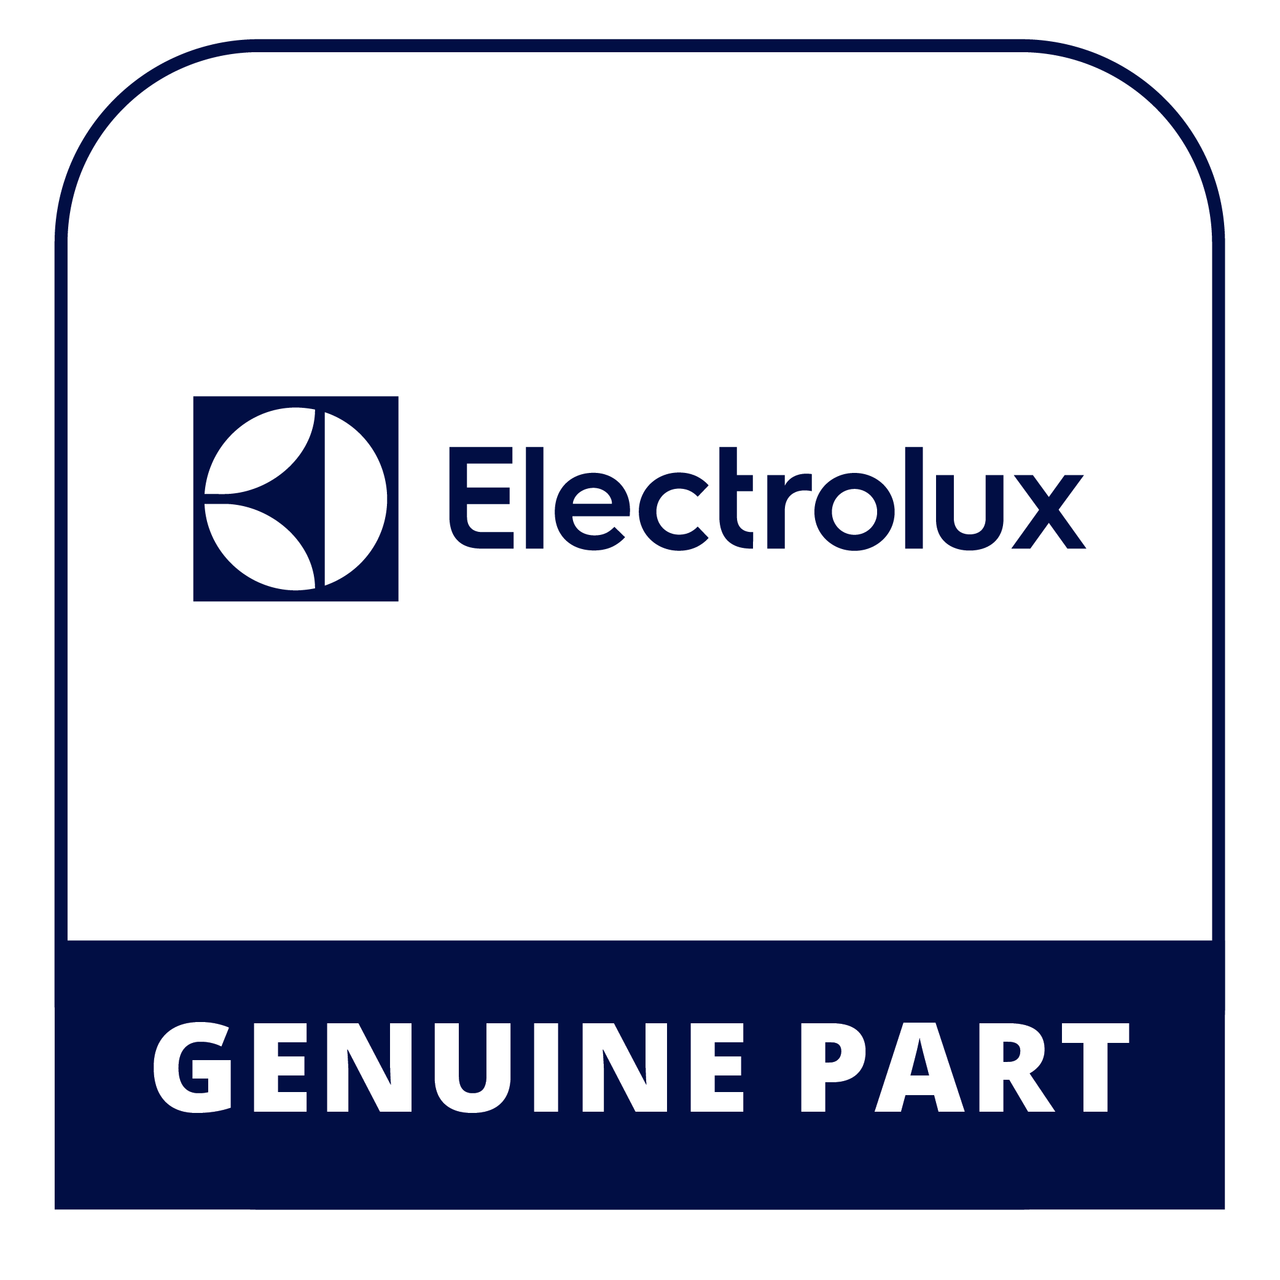 Frigidaire - Electrolux 5304514237 Air Guide - Genuine Electrolux Part